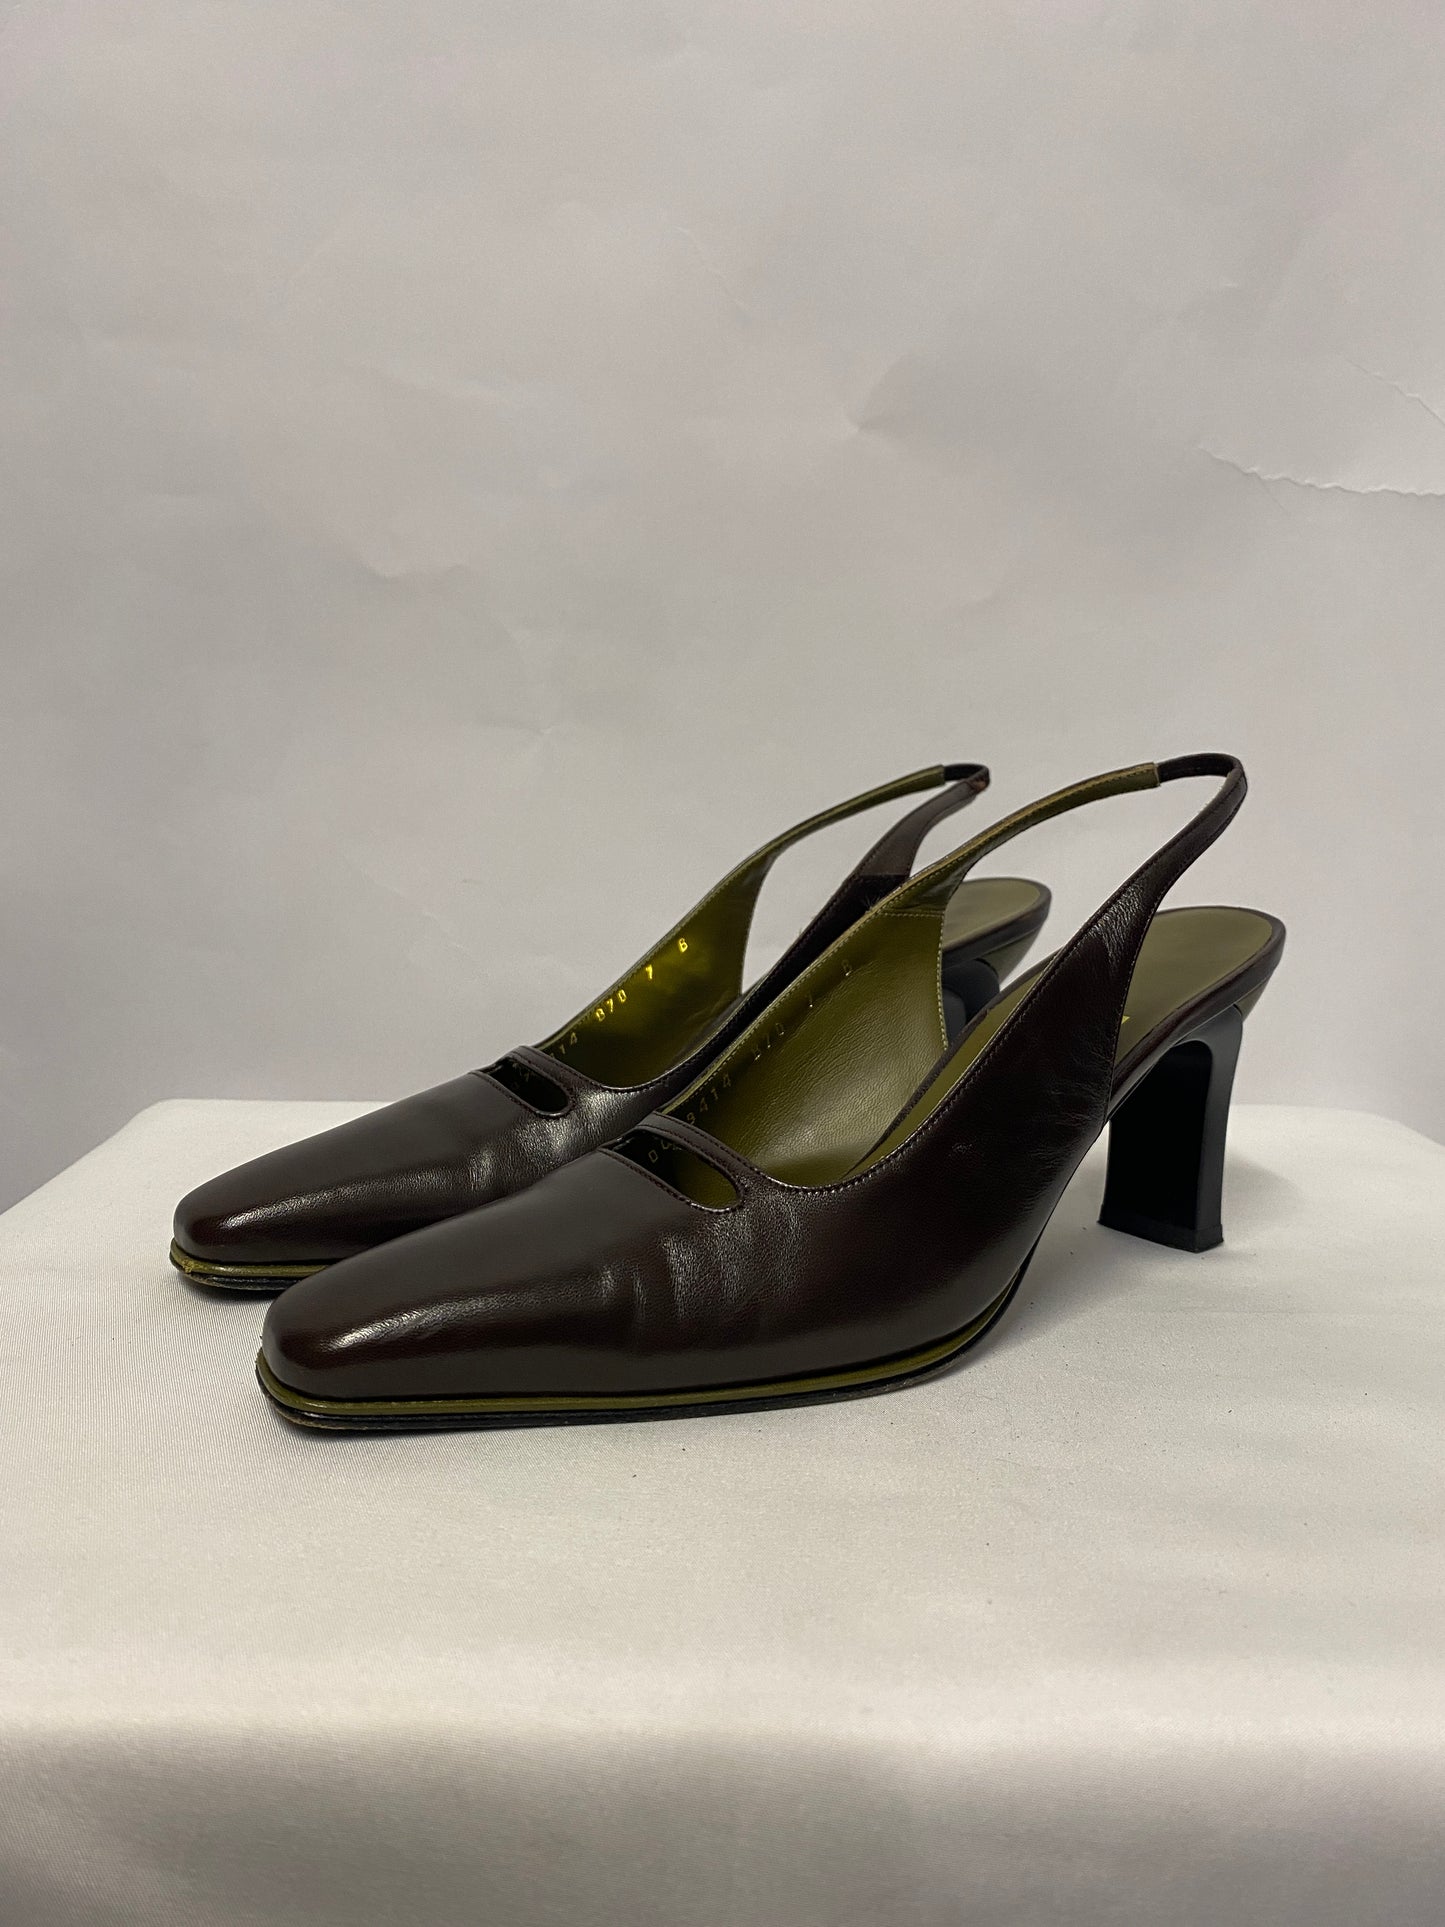 Salvatore Ferragamo Brown and Green Leather Slingback Heels 4.5